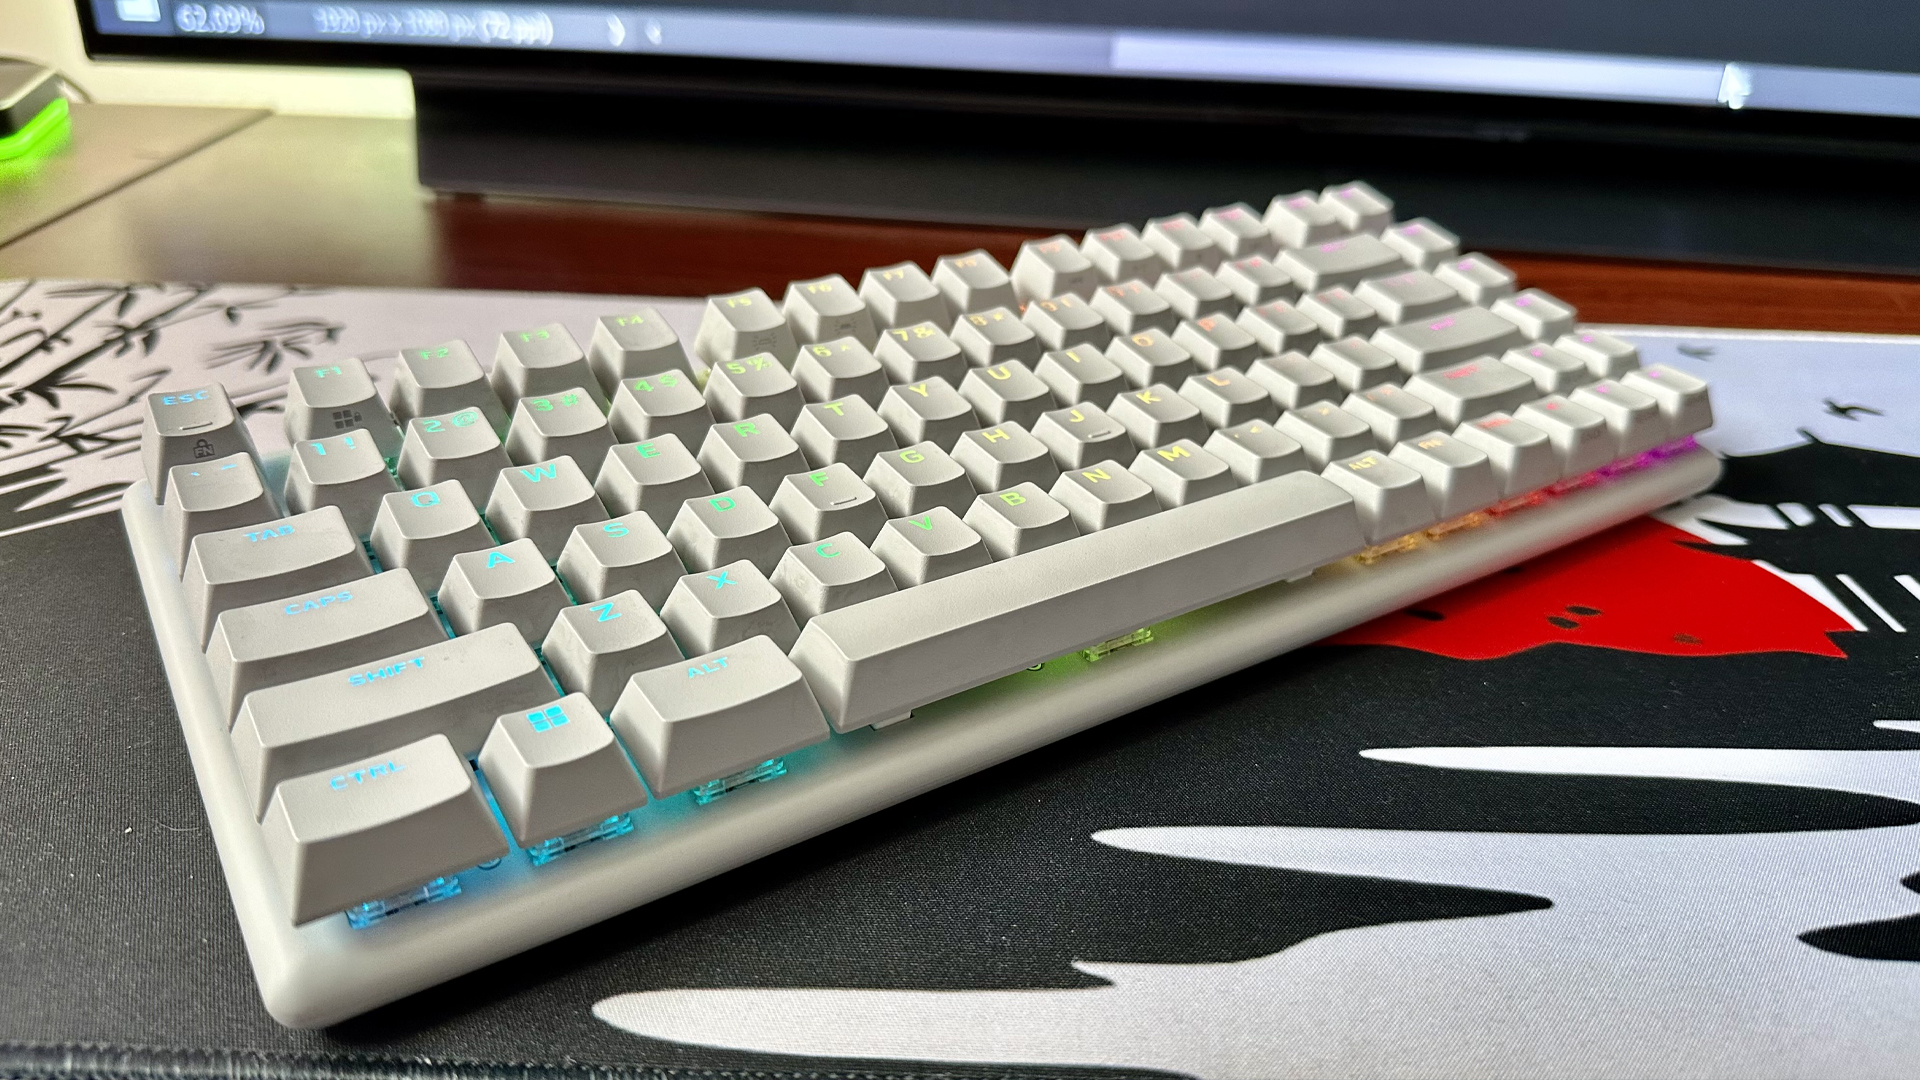 Alienware Pro Keyboard in Lunar White with all keys fully lit.